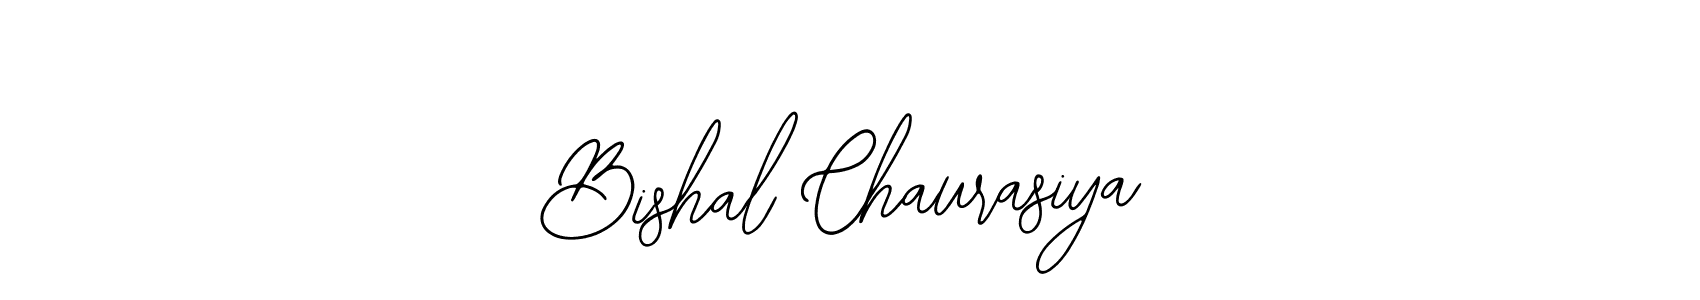 Make a beautiful signature design for name Bishal Chaurasiya. Use this online signature maker to create a handwritten signature for free. Bishal Chaurasiya signature style 12 images and pictures png